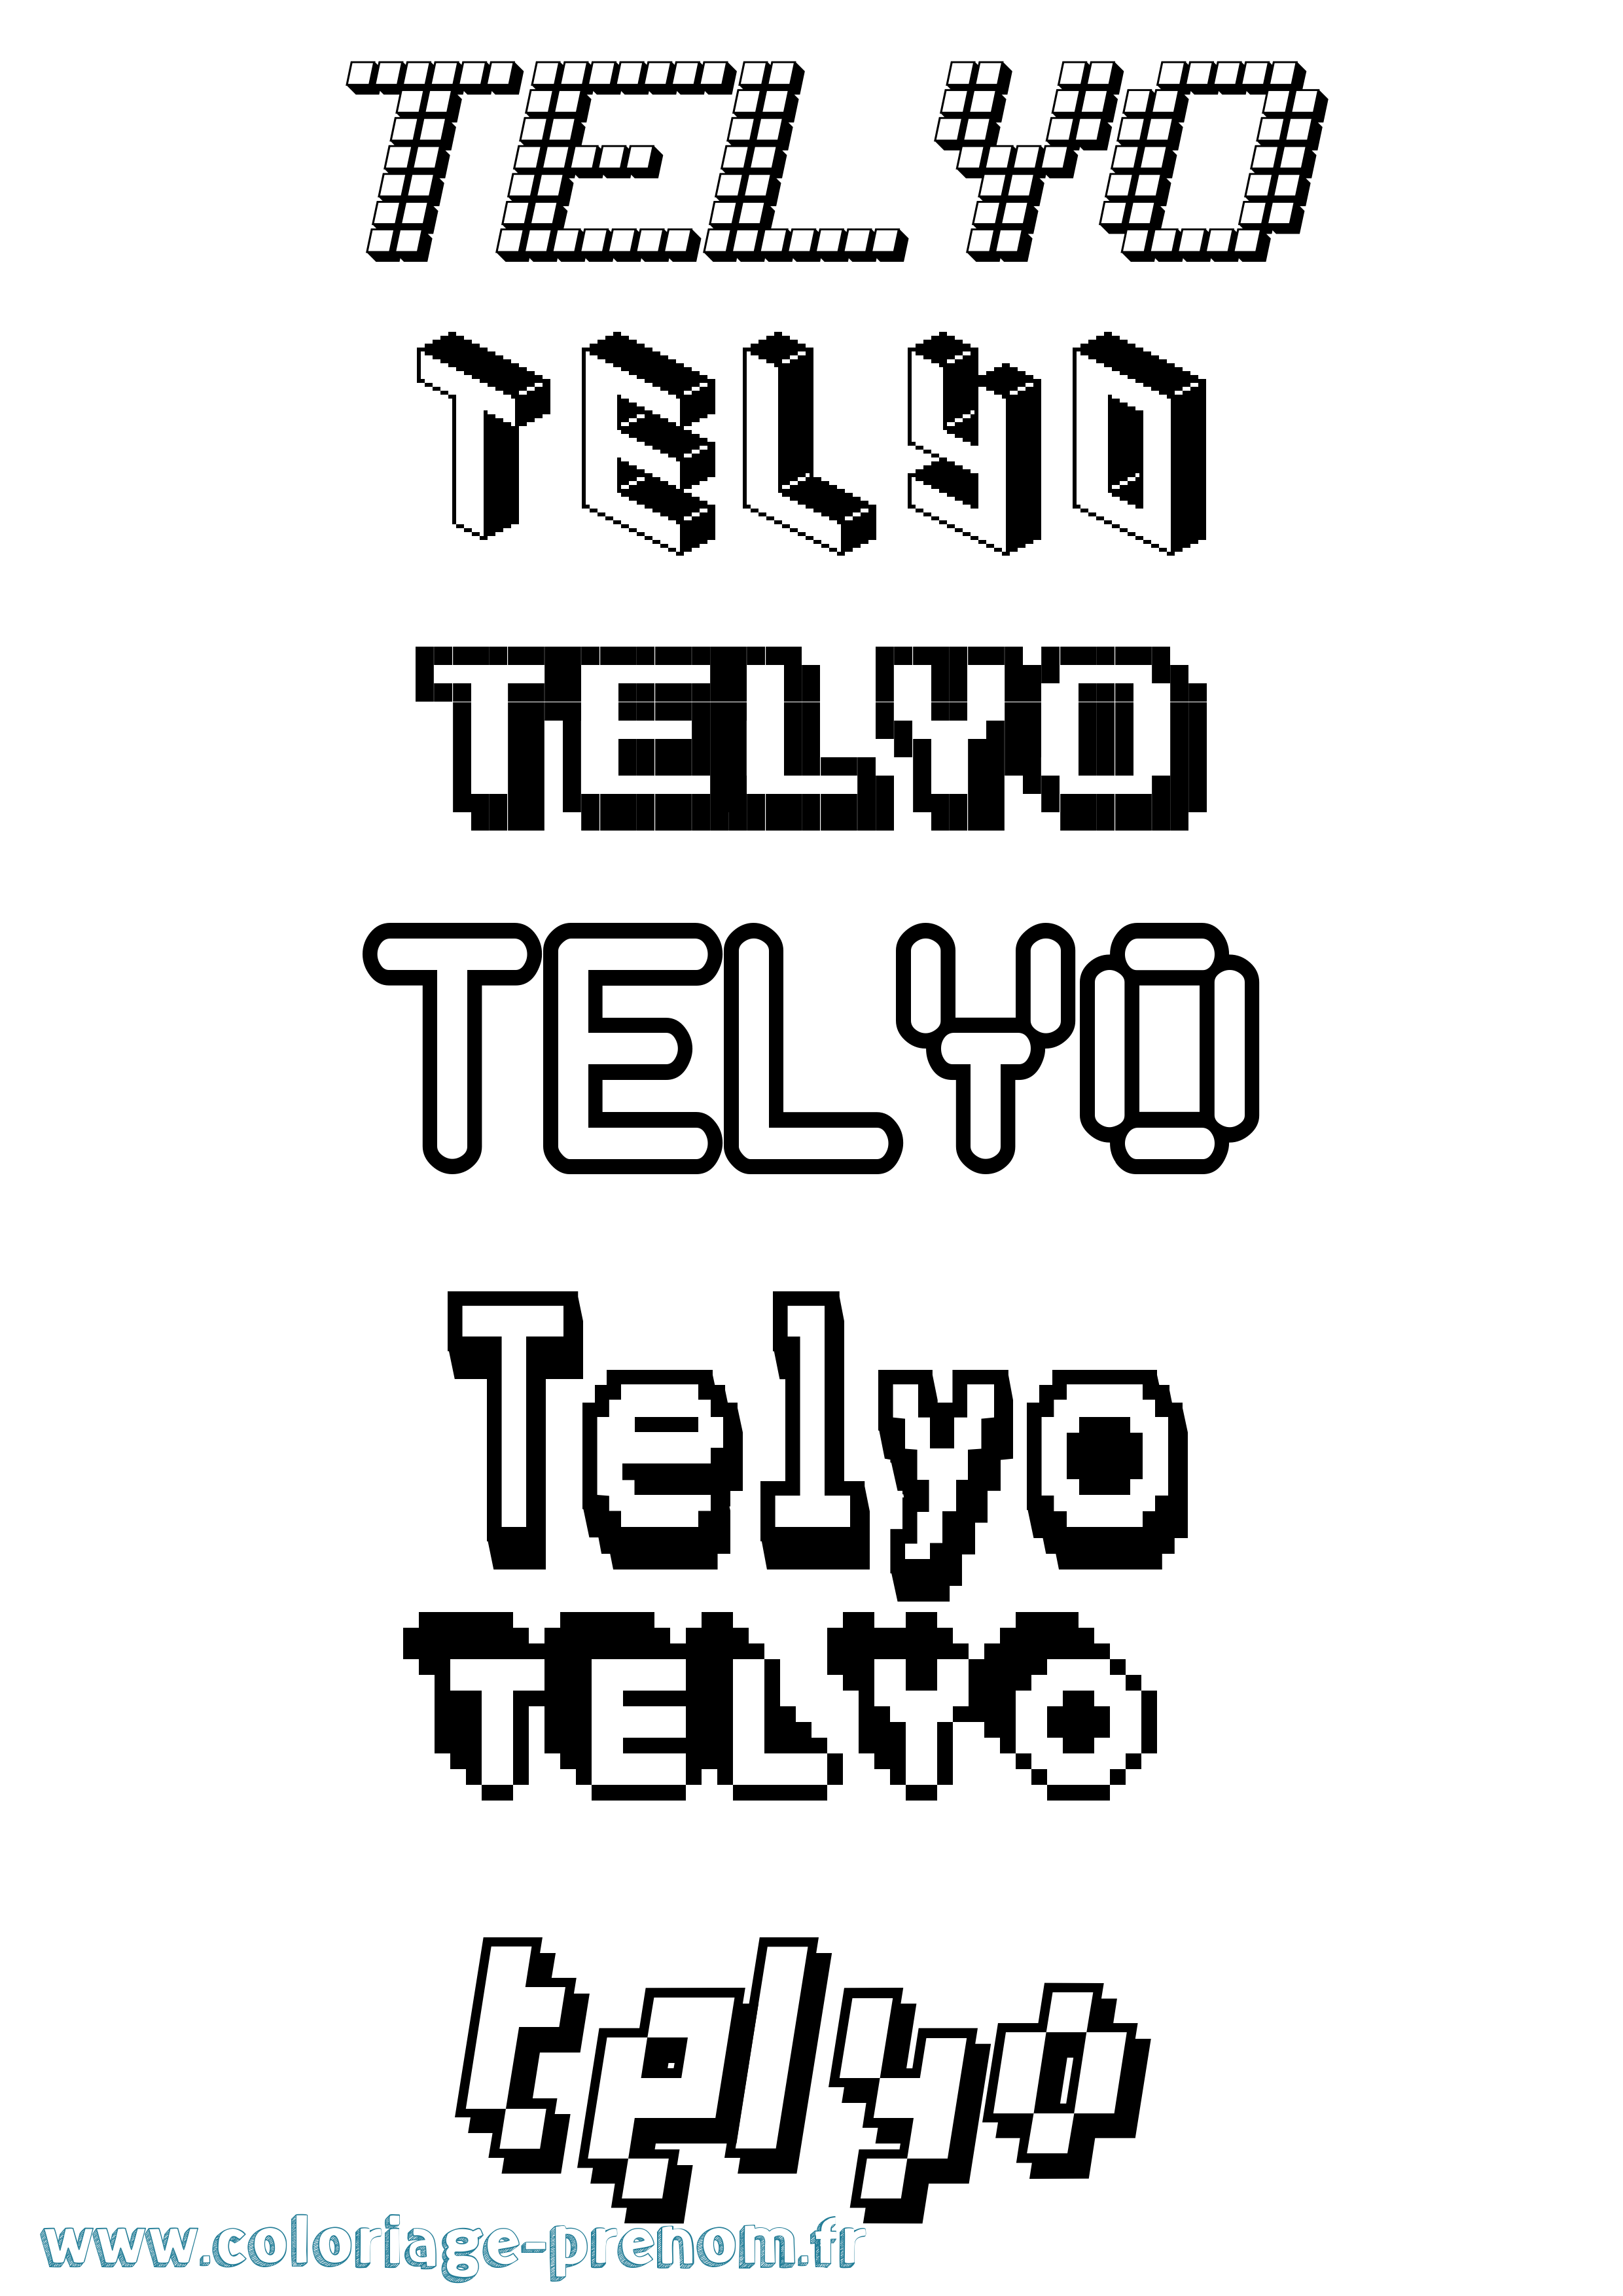 Coloriage prénom Telyo Pixel